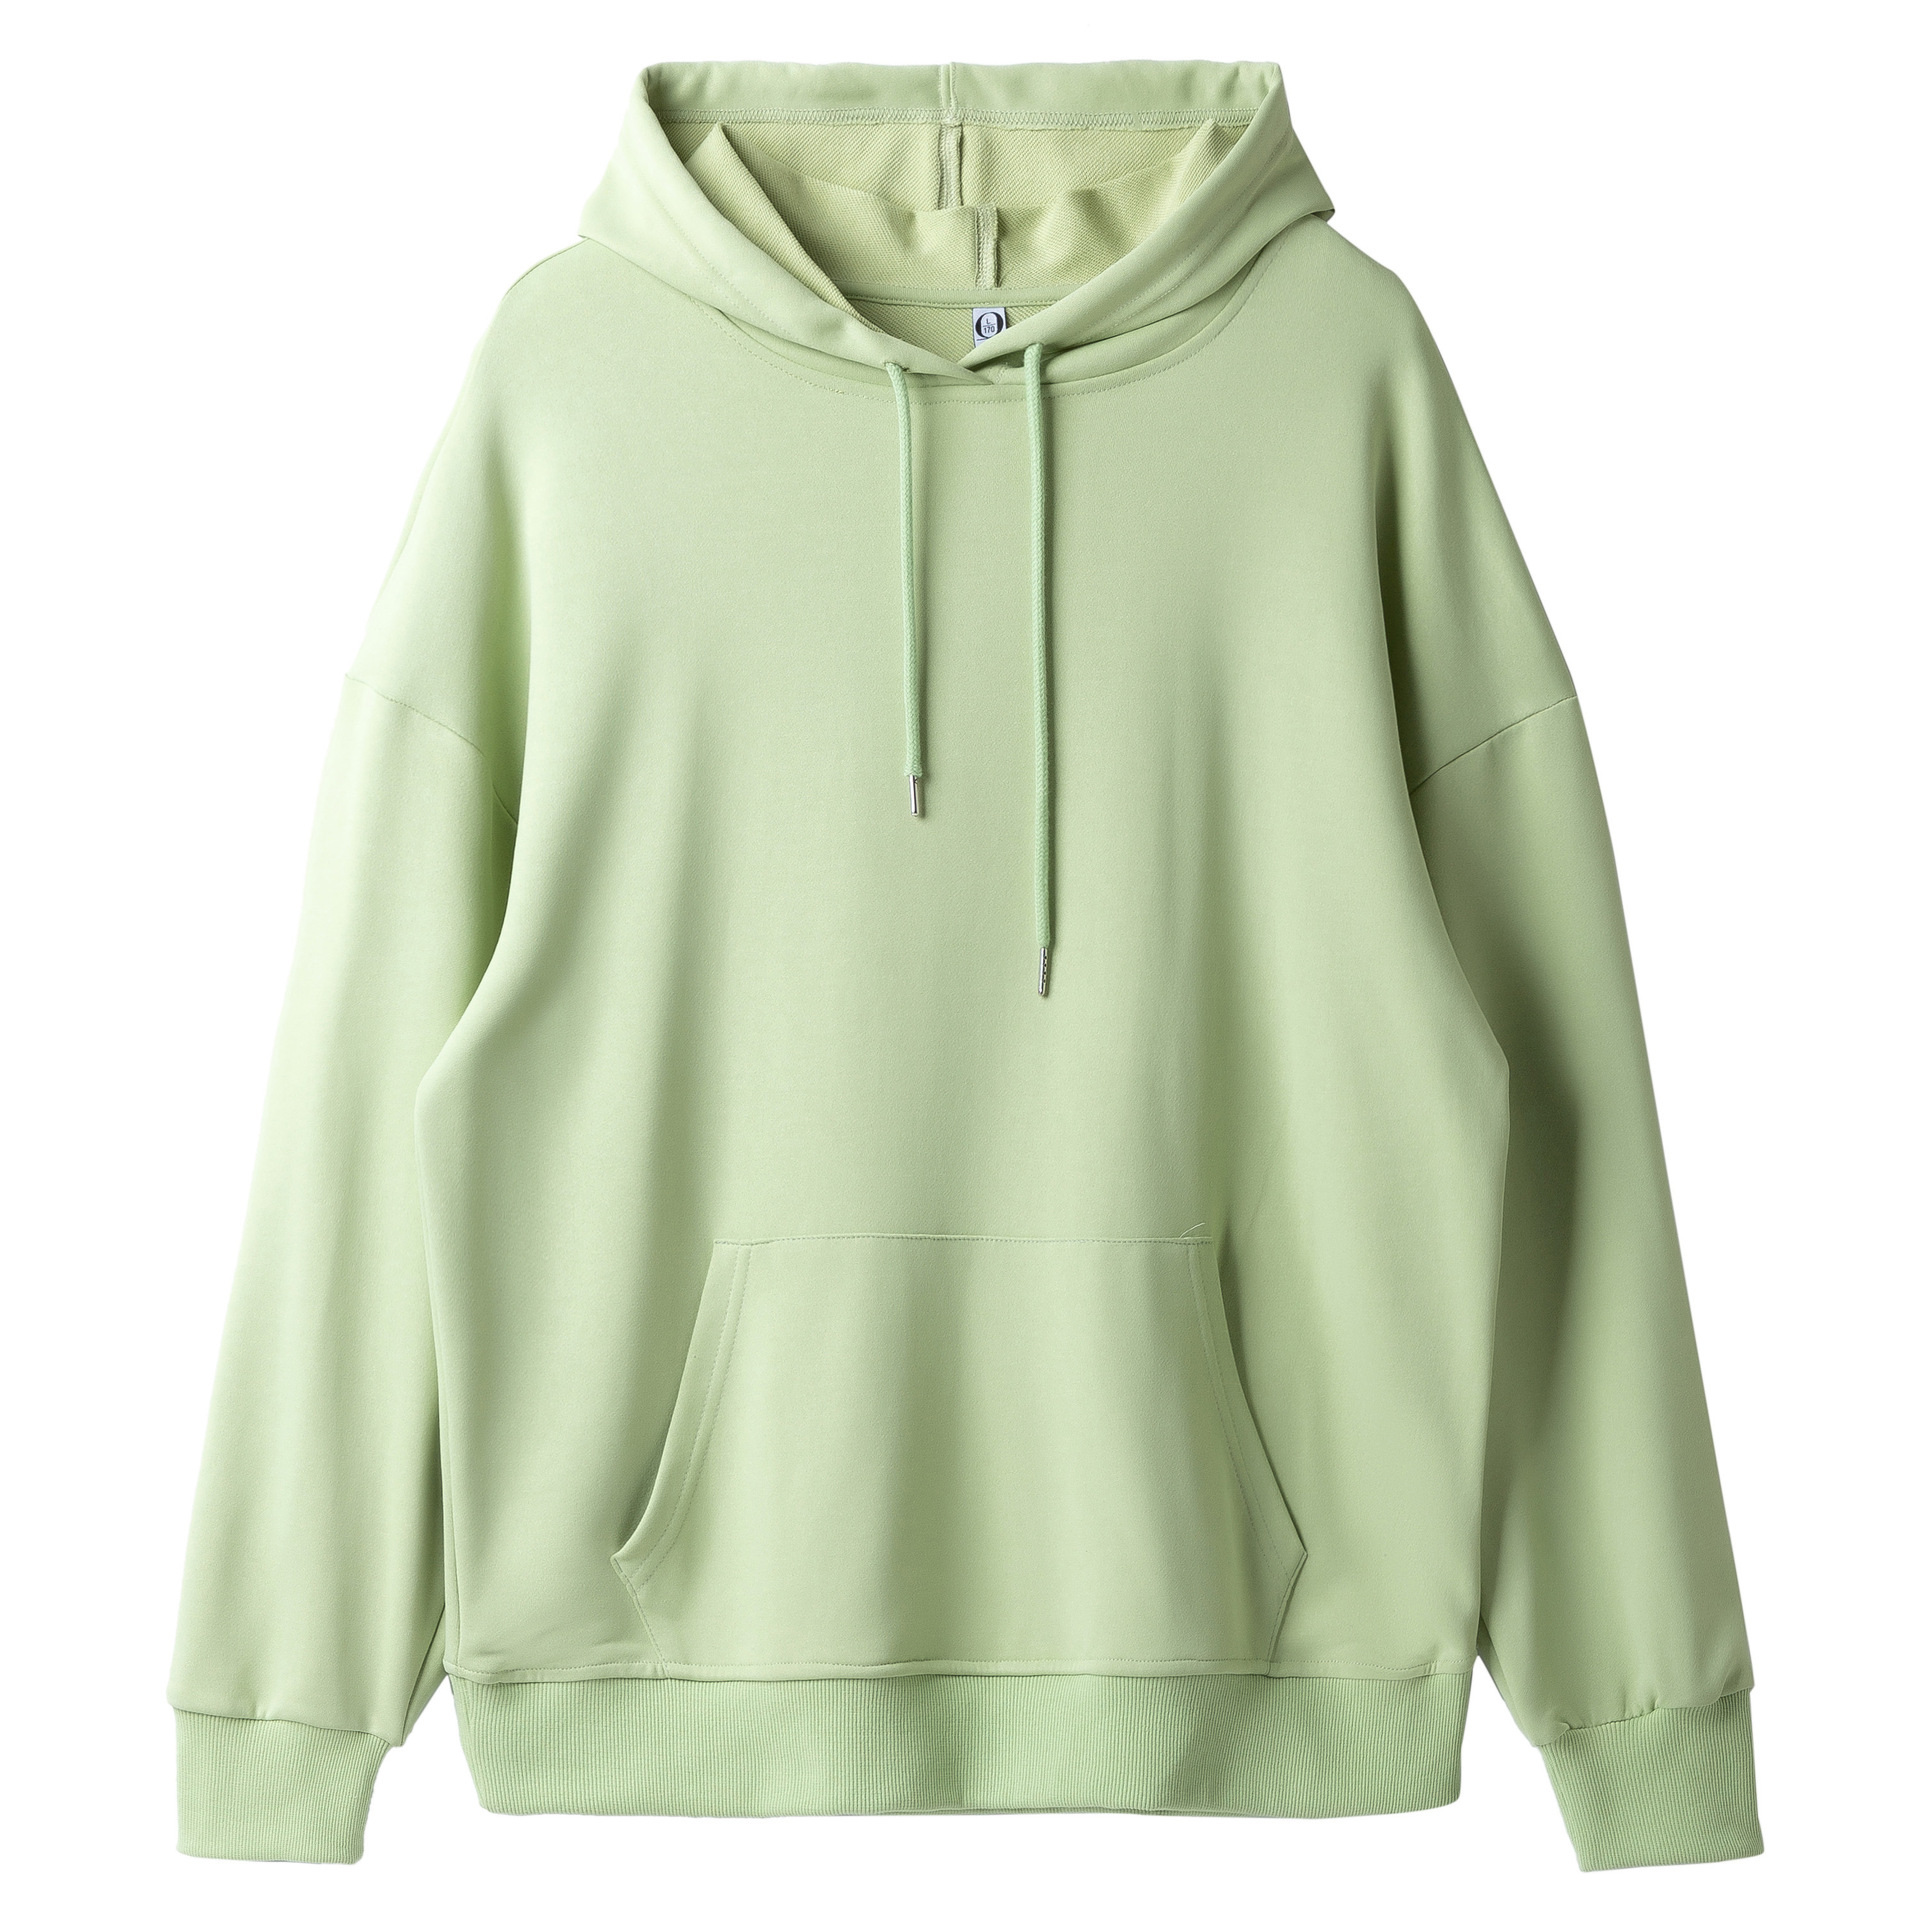 hoodies in bulk cheap